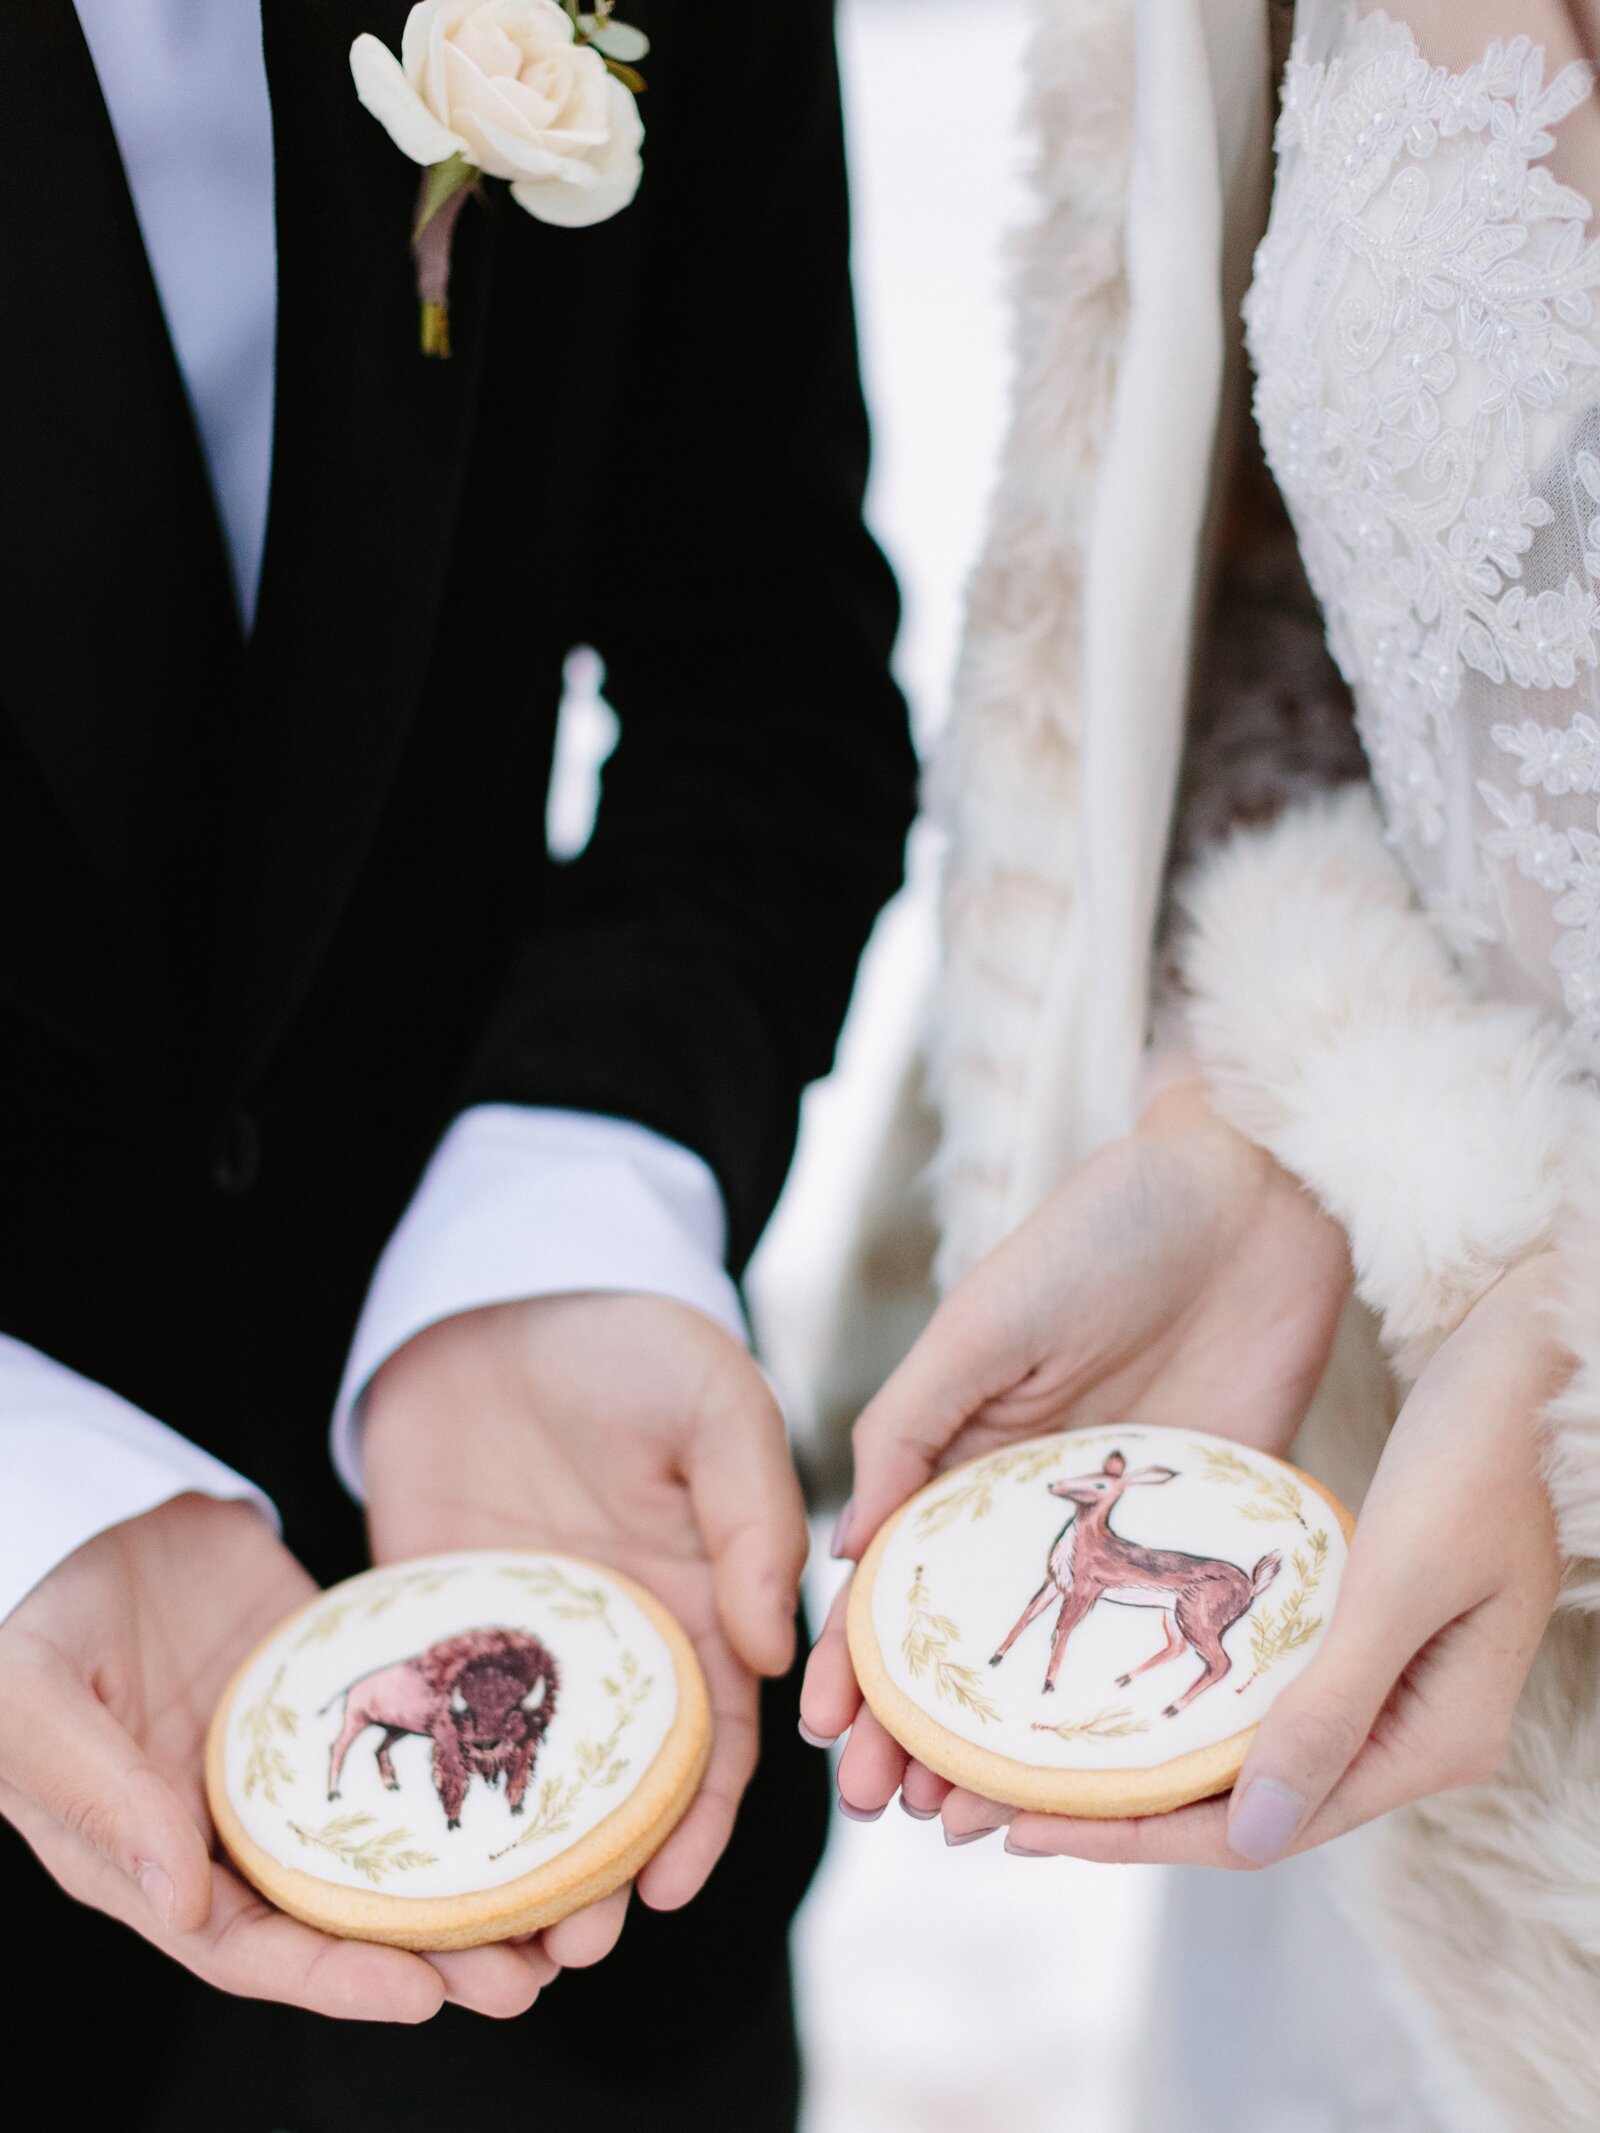 33 Wedding Cookies That Will Sweeten Up Your Dessert Table